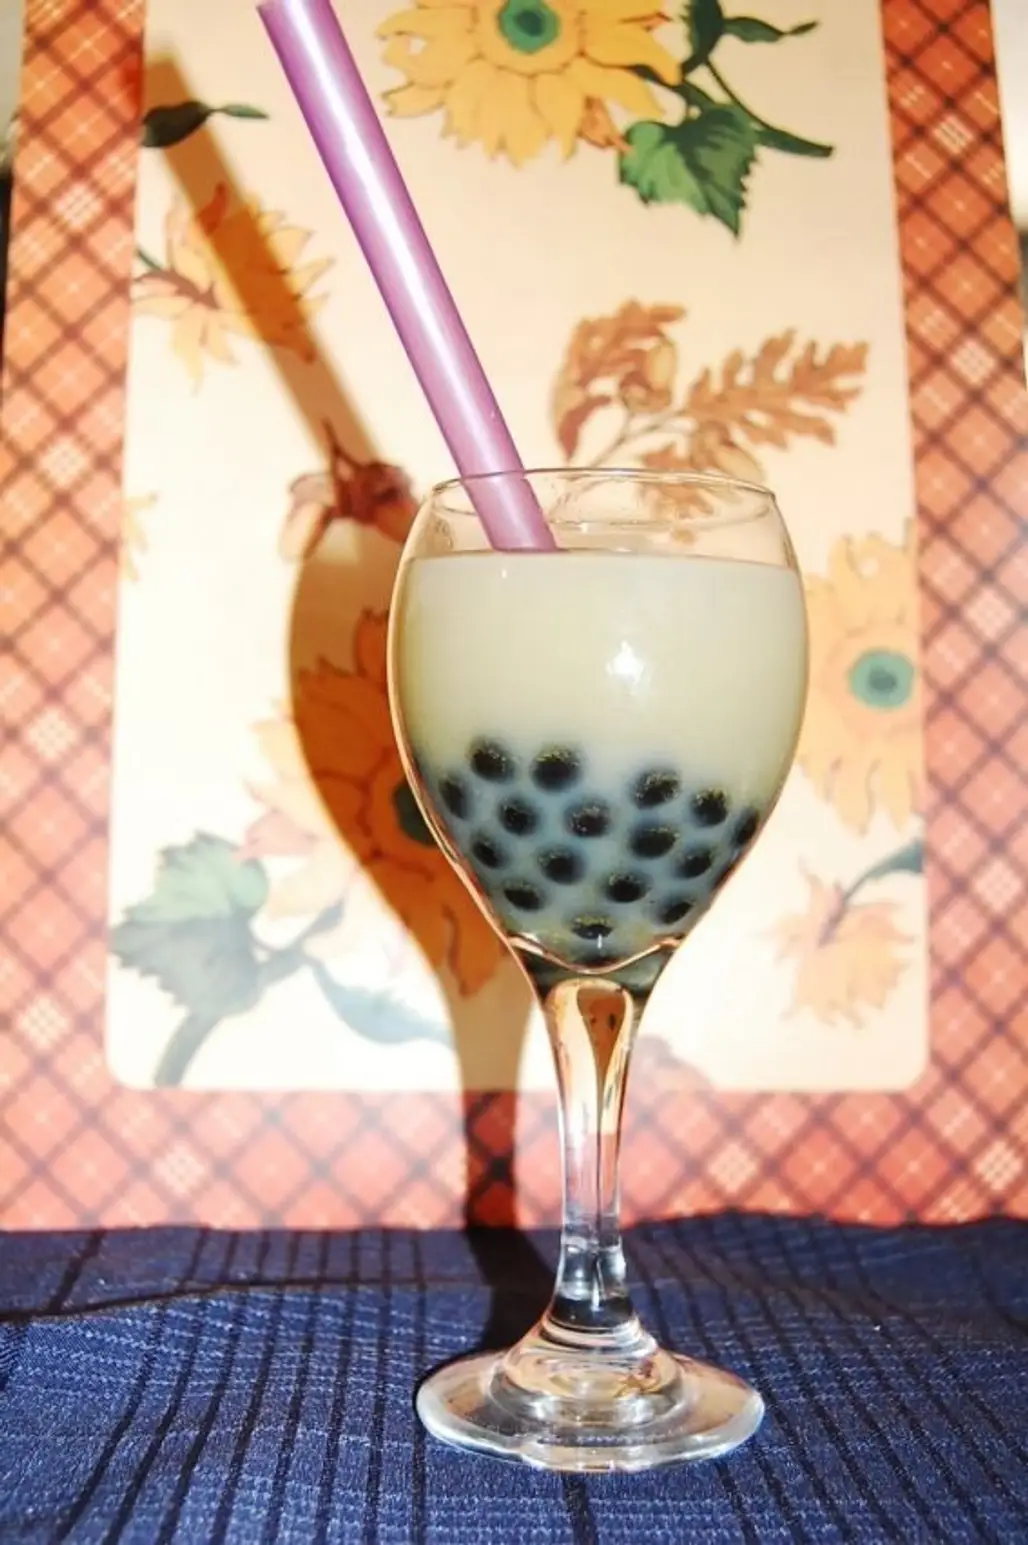 Lavender Milk Tea with Tapioca